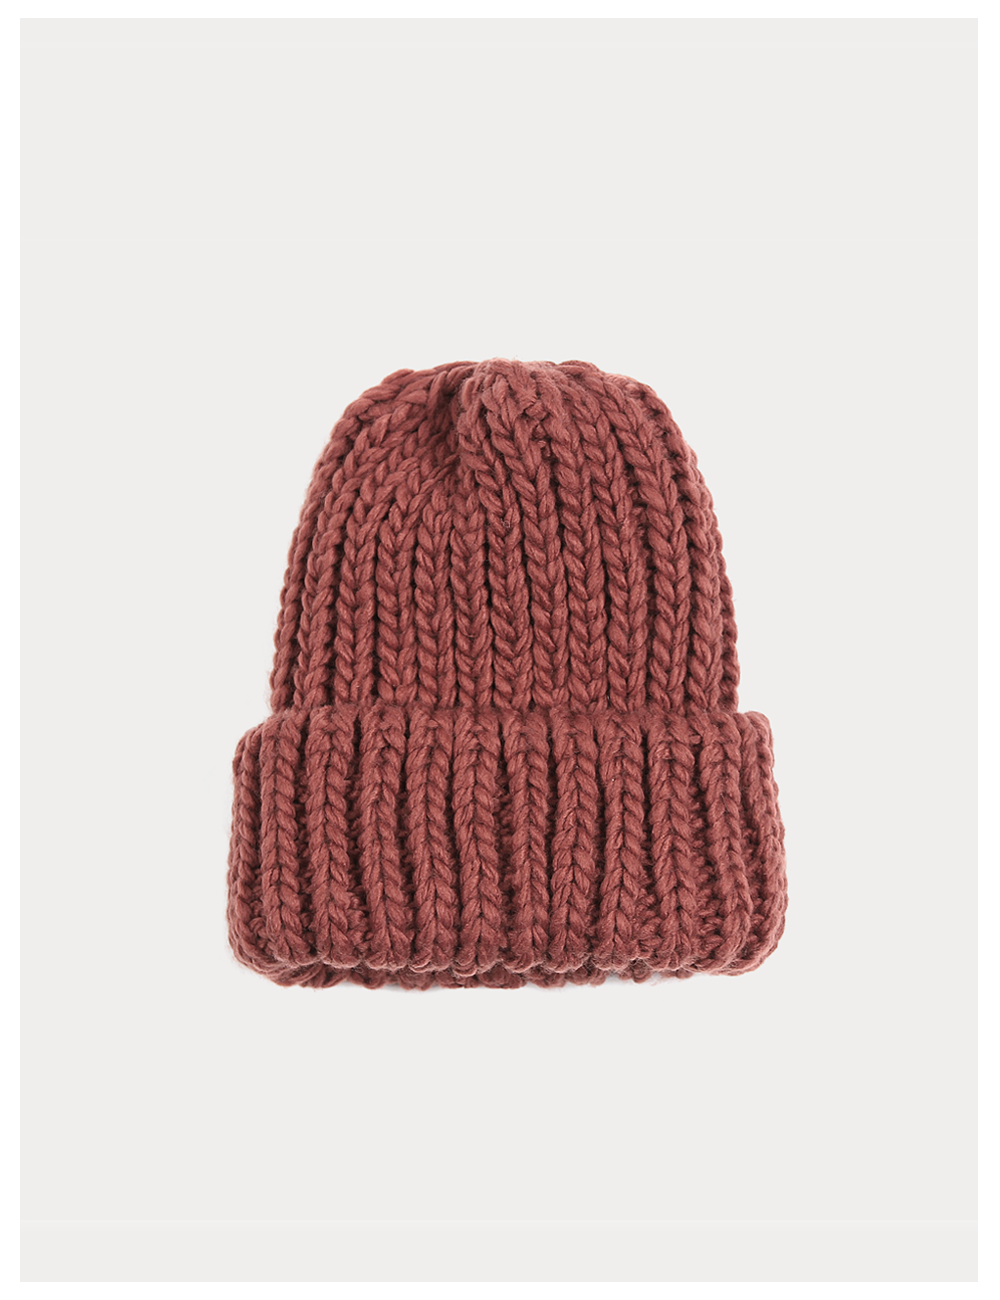 So Heavy knit Hat_Red Brown 굵은 뜨개 니트 비니